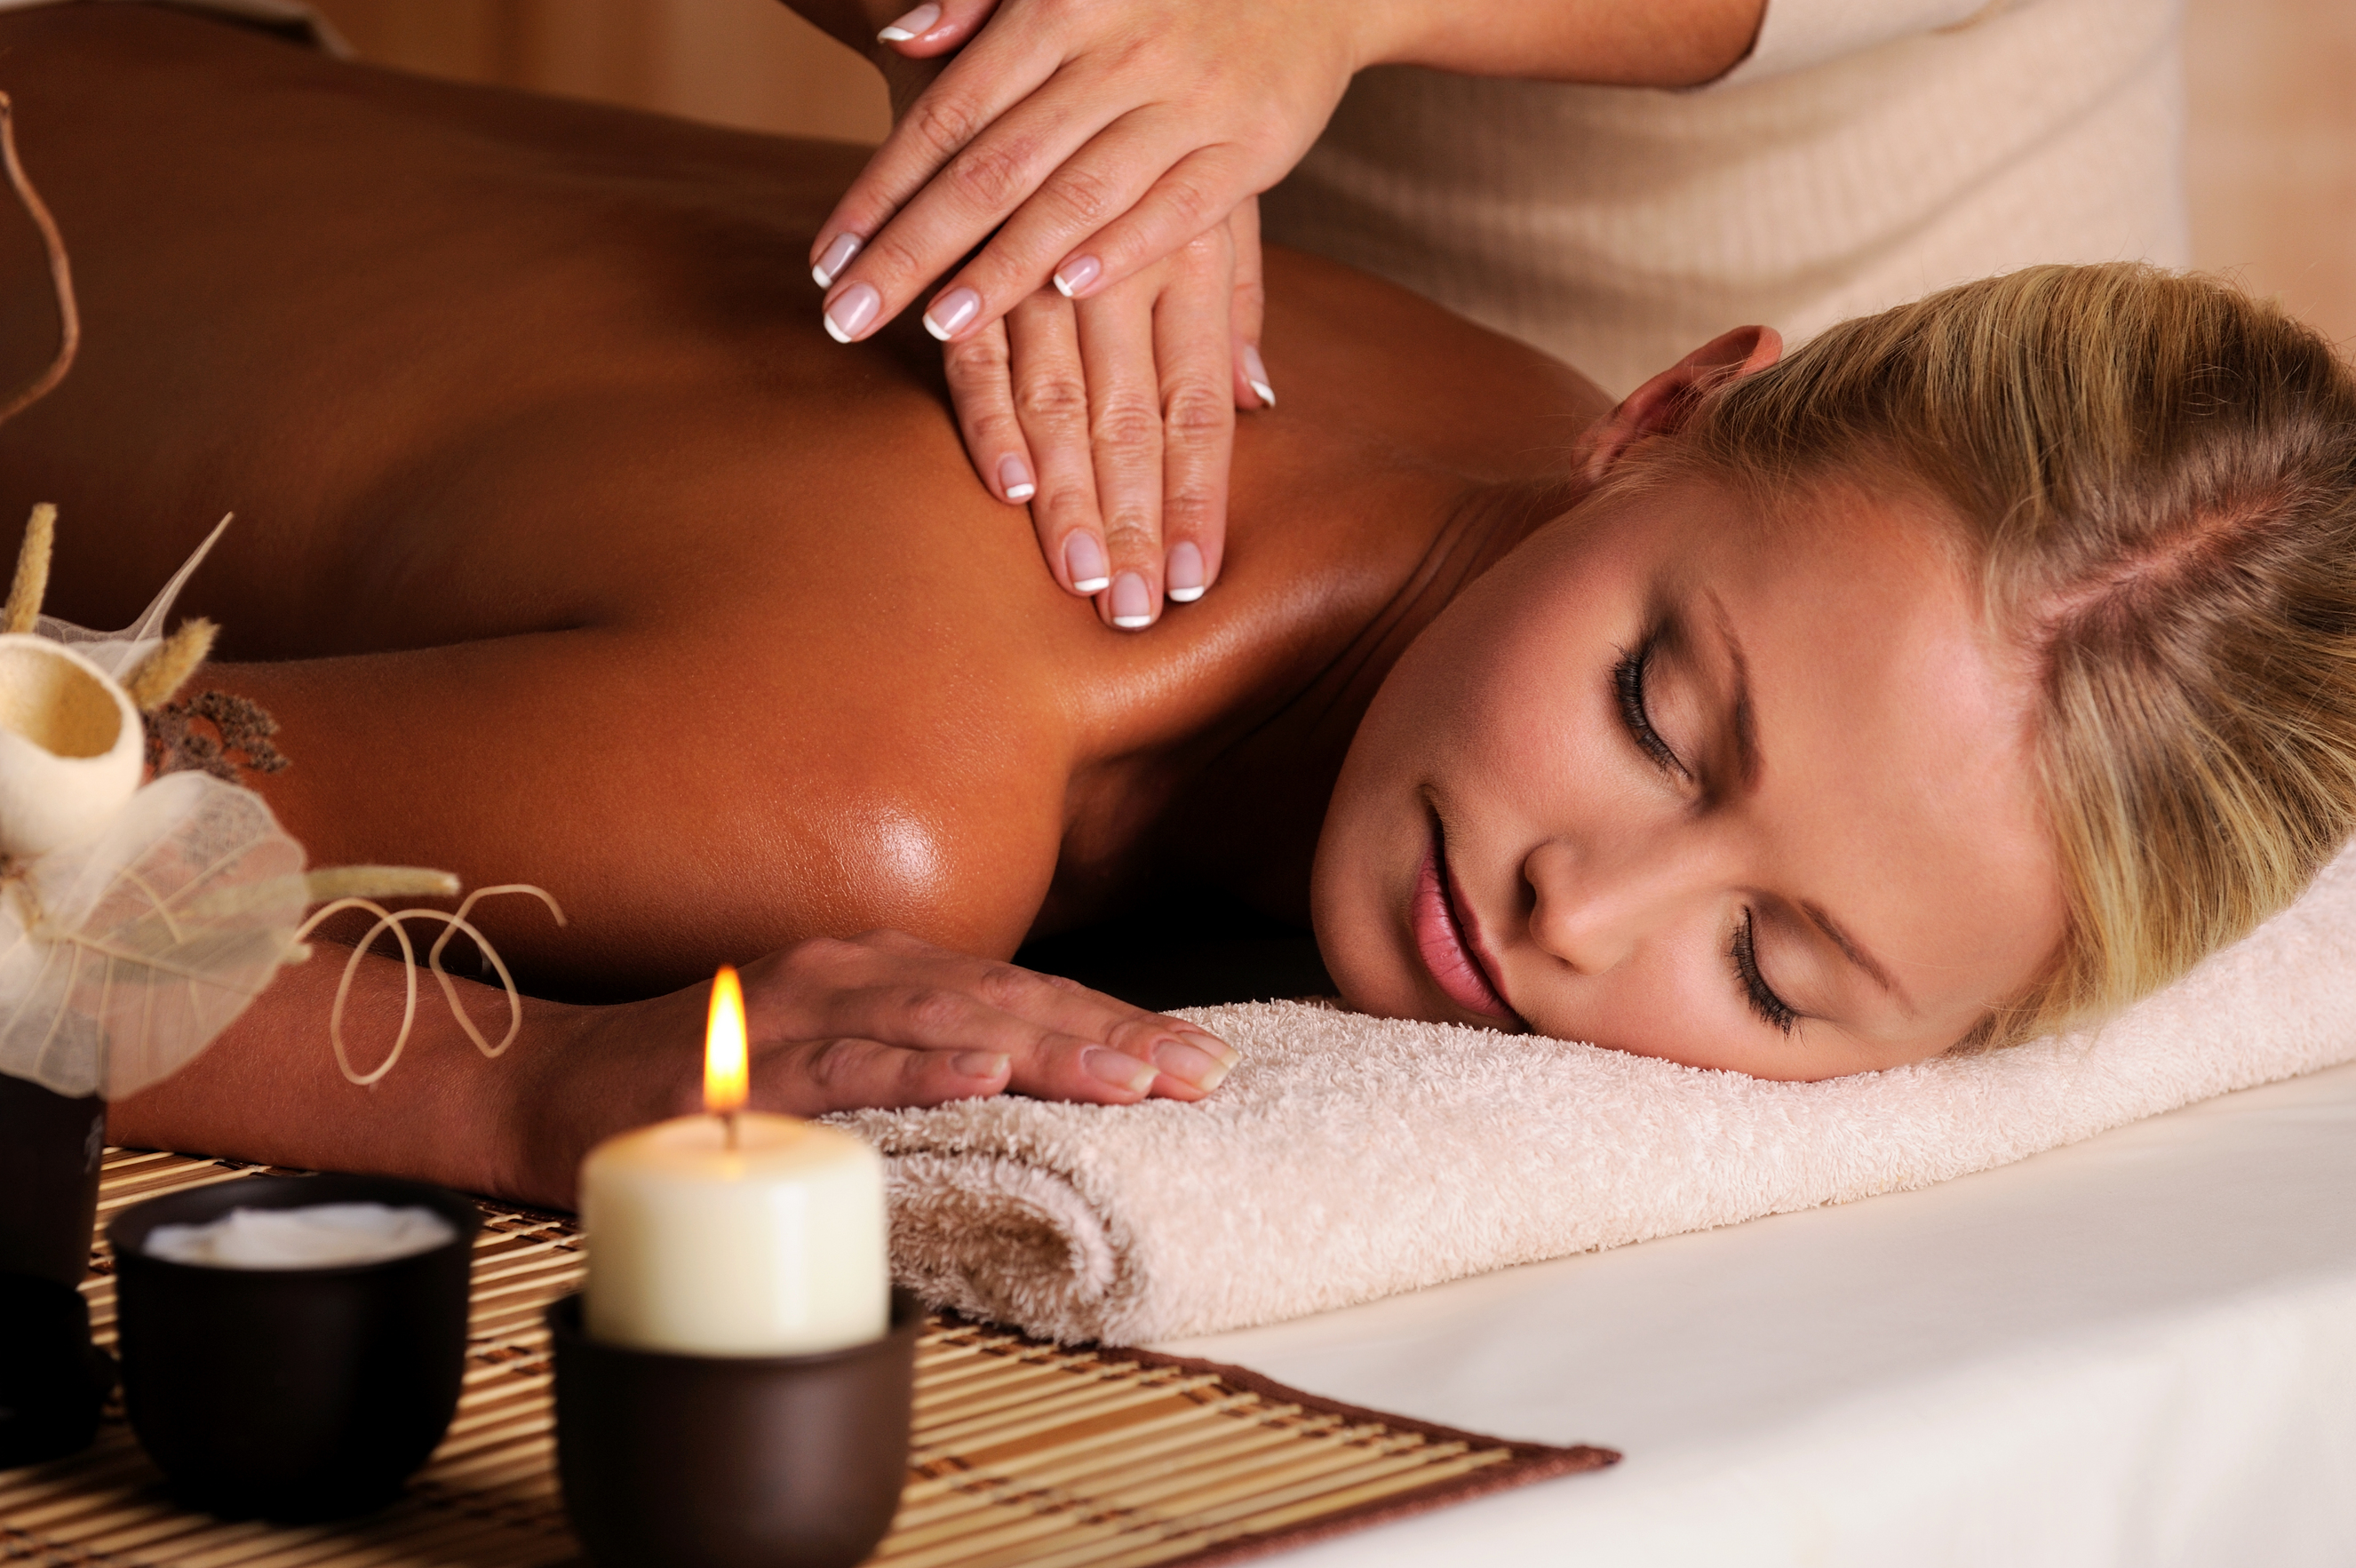 professional-masseur-doing-massage-of-female-back-in-the-beauty-salon-2